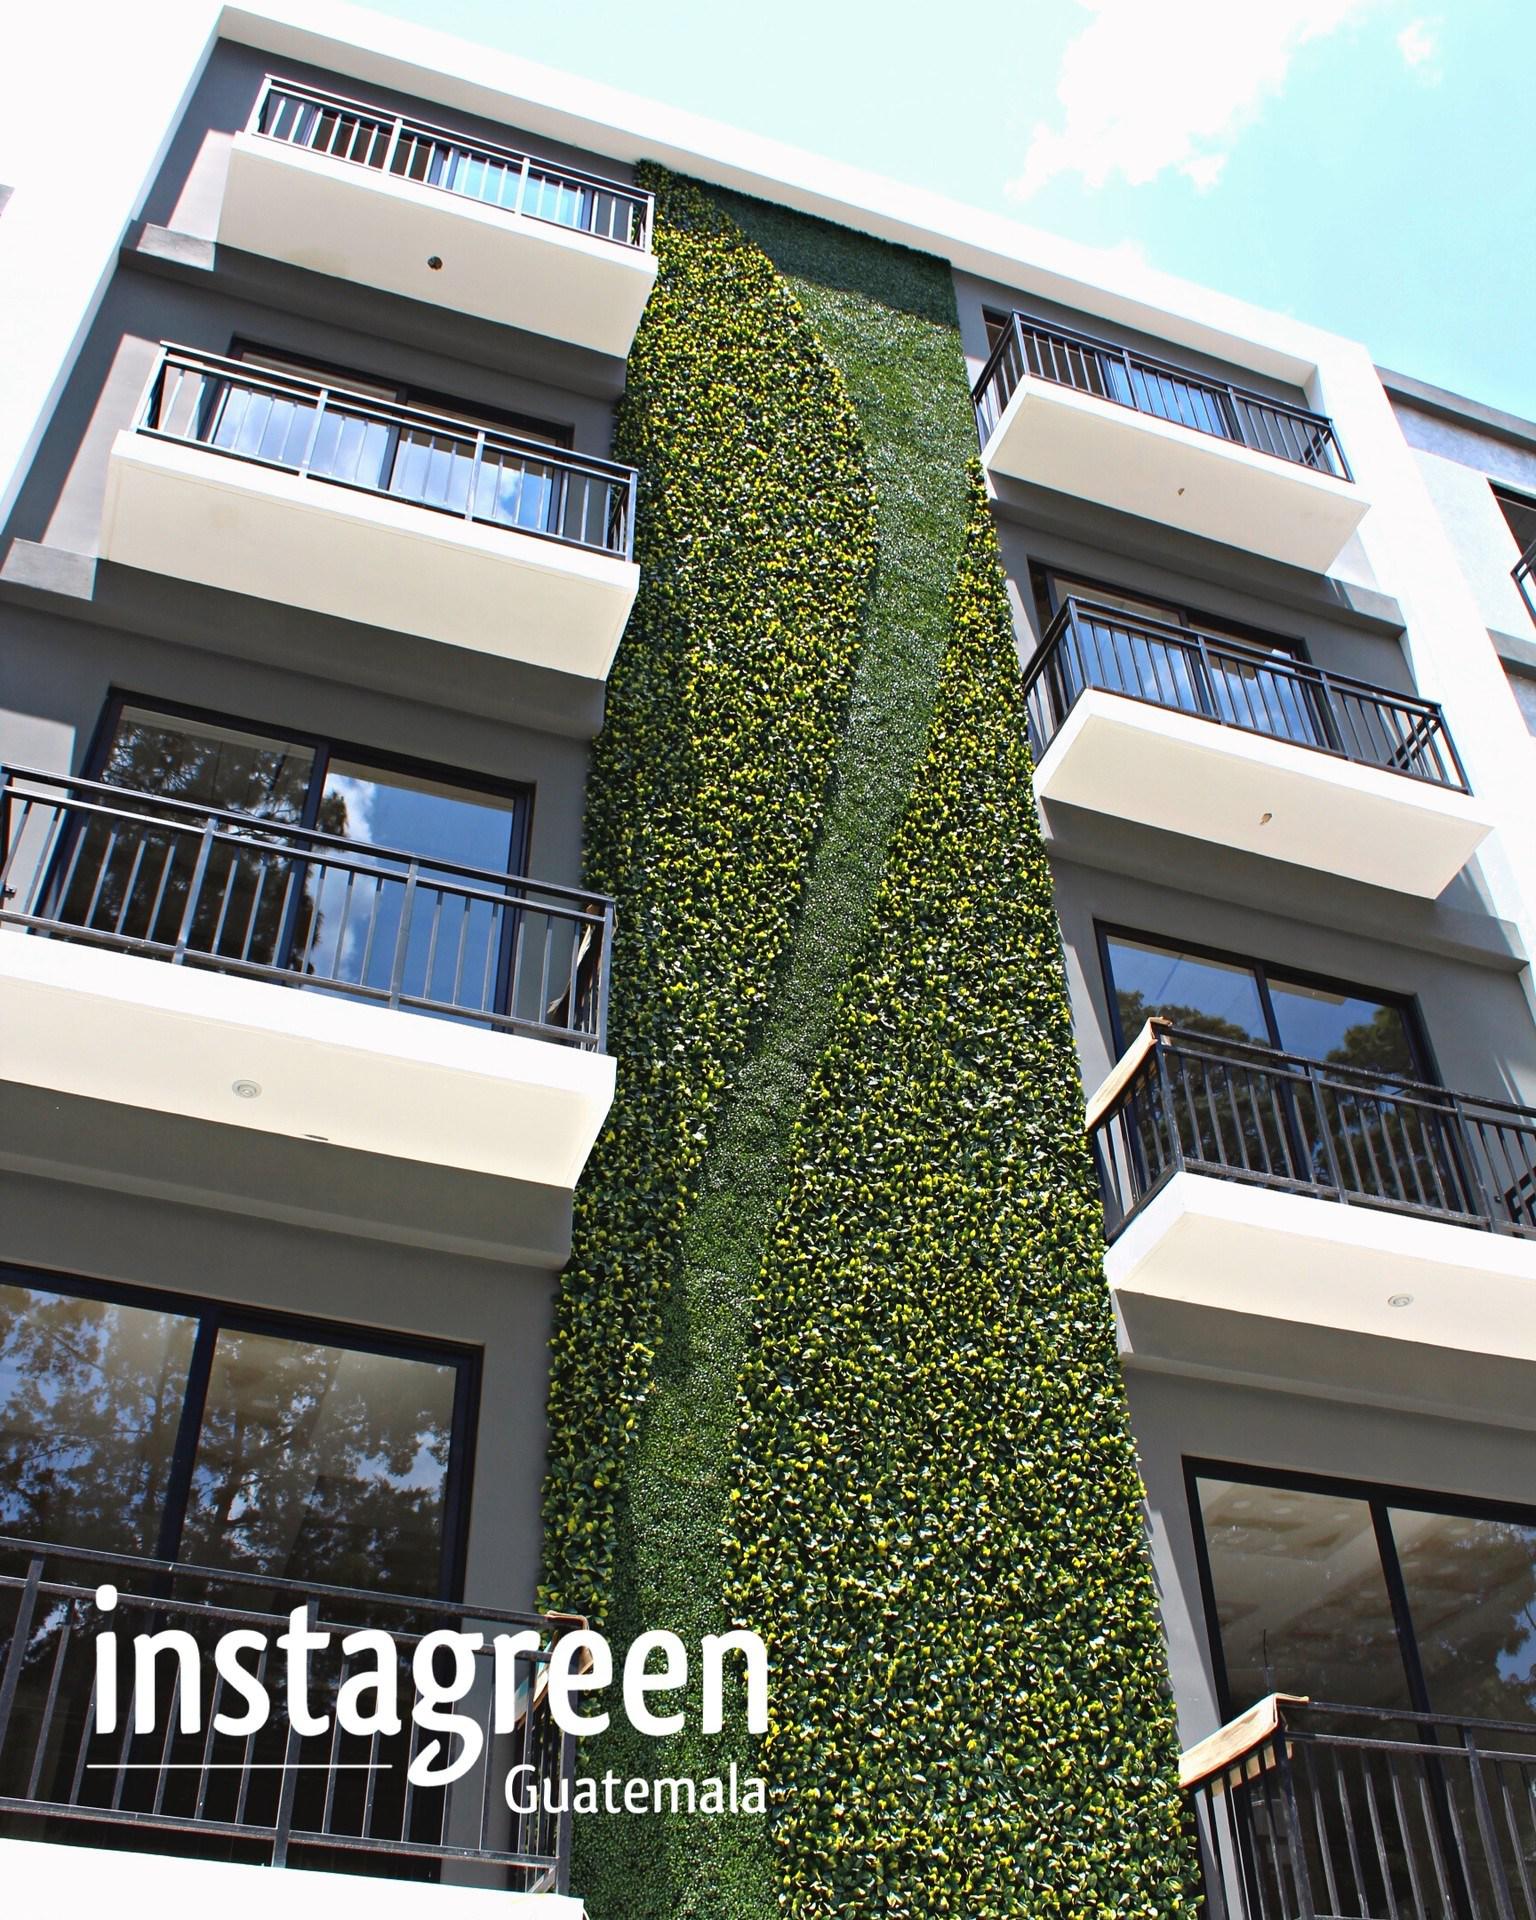 Building cover with artificial gardenias custom design Instagreen San Diego San Diego (858)372-6665